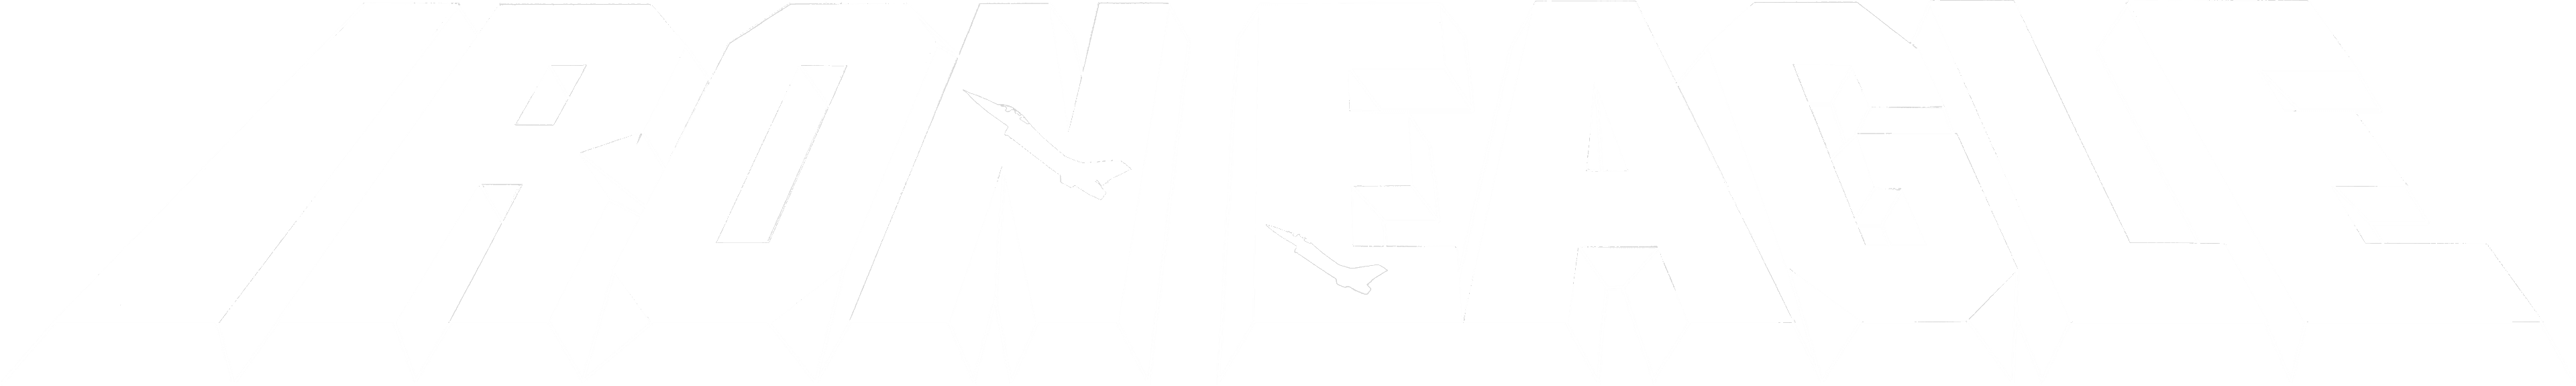 Iron Eagle logo